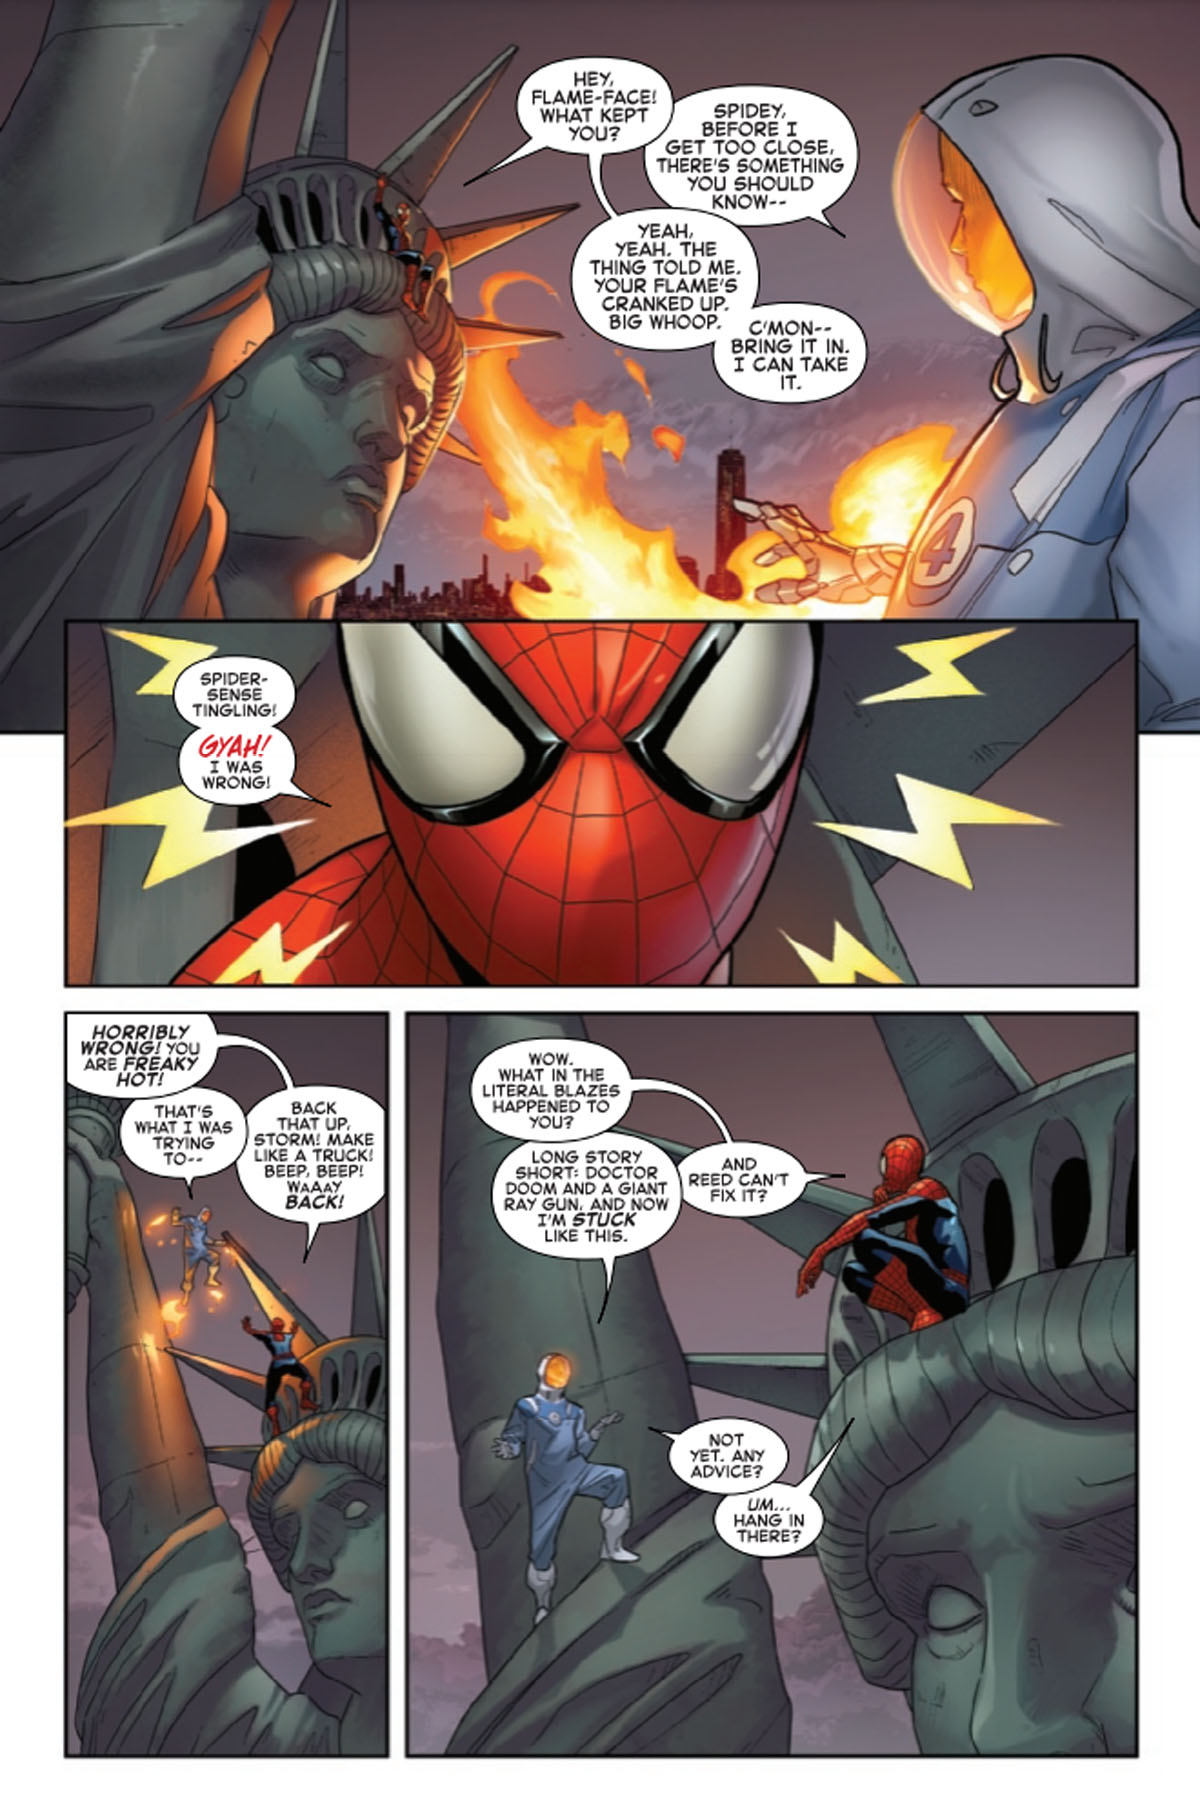 Fantastic Four #37 page 4